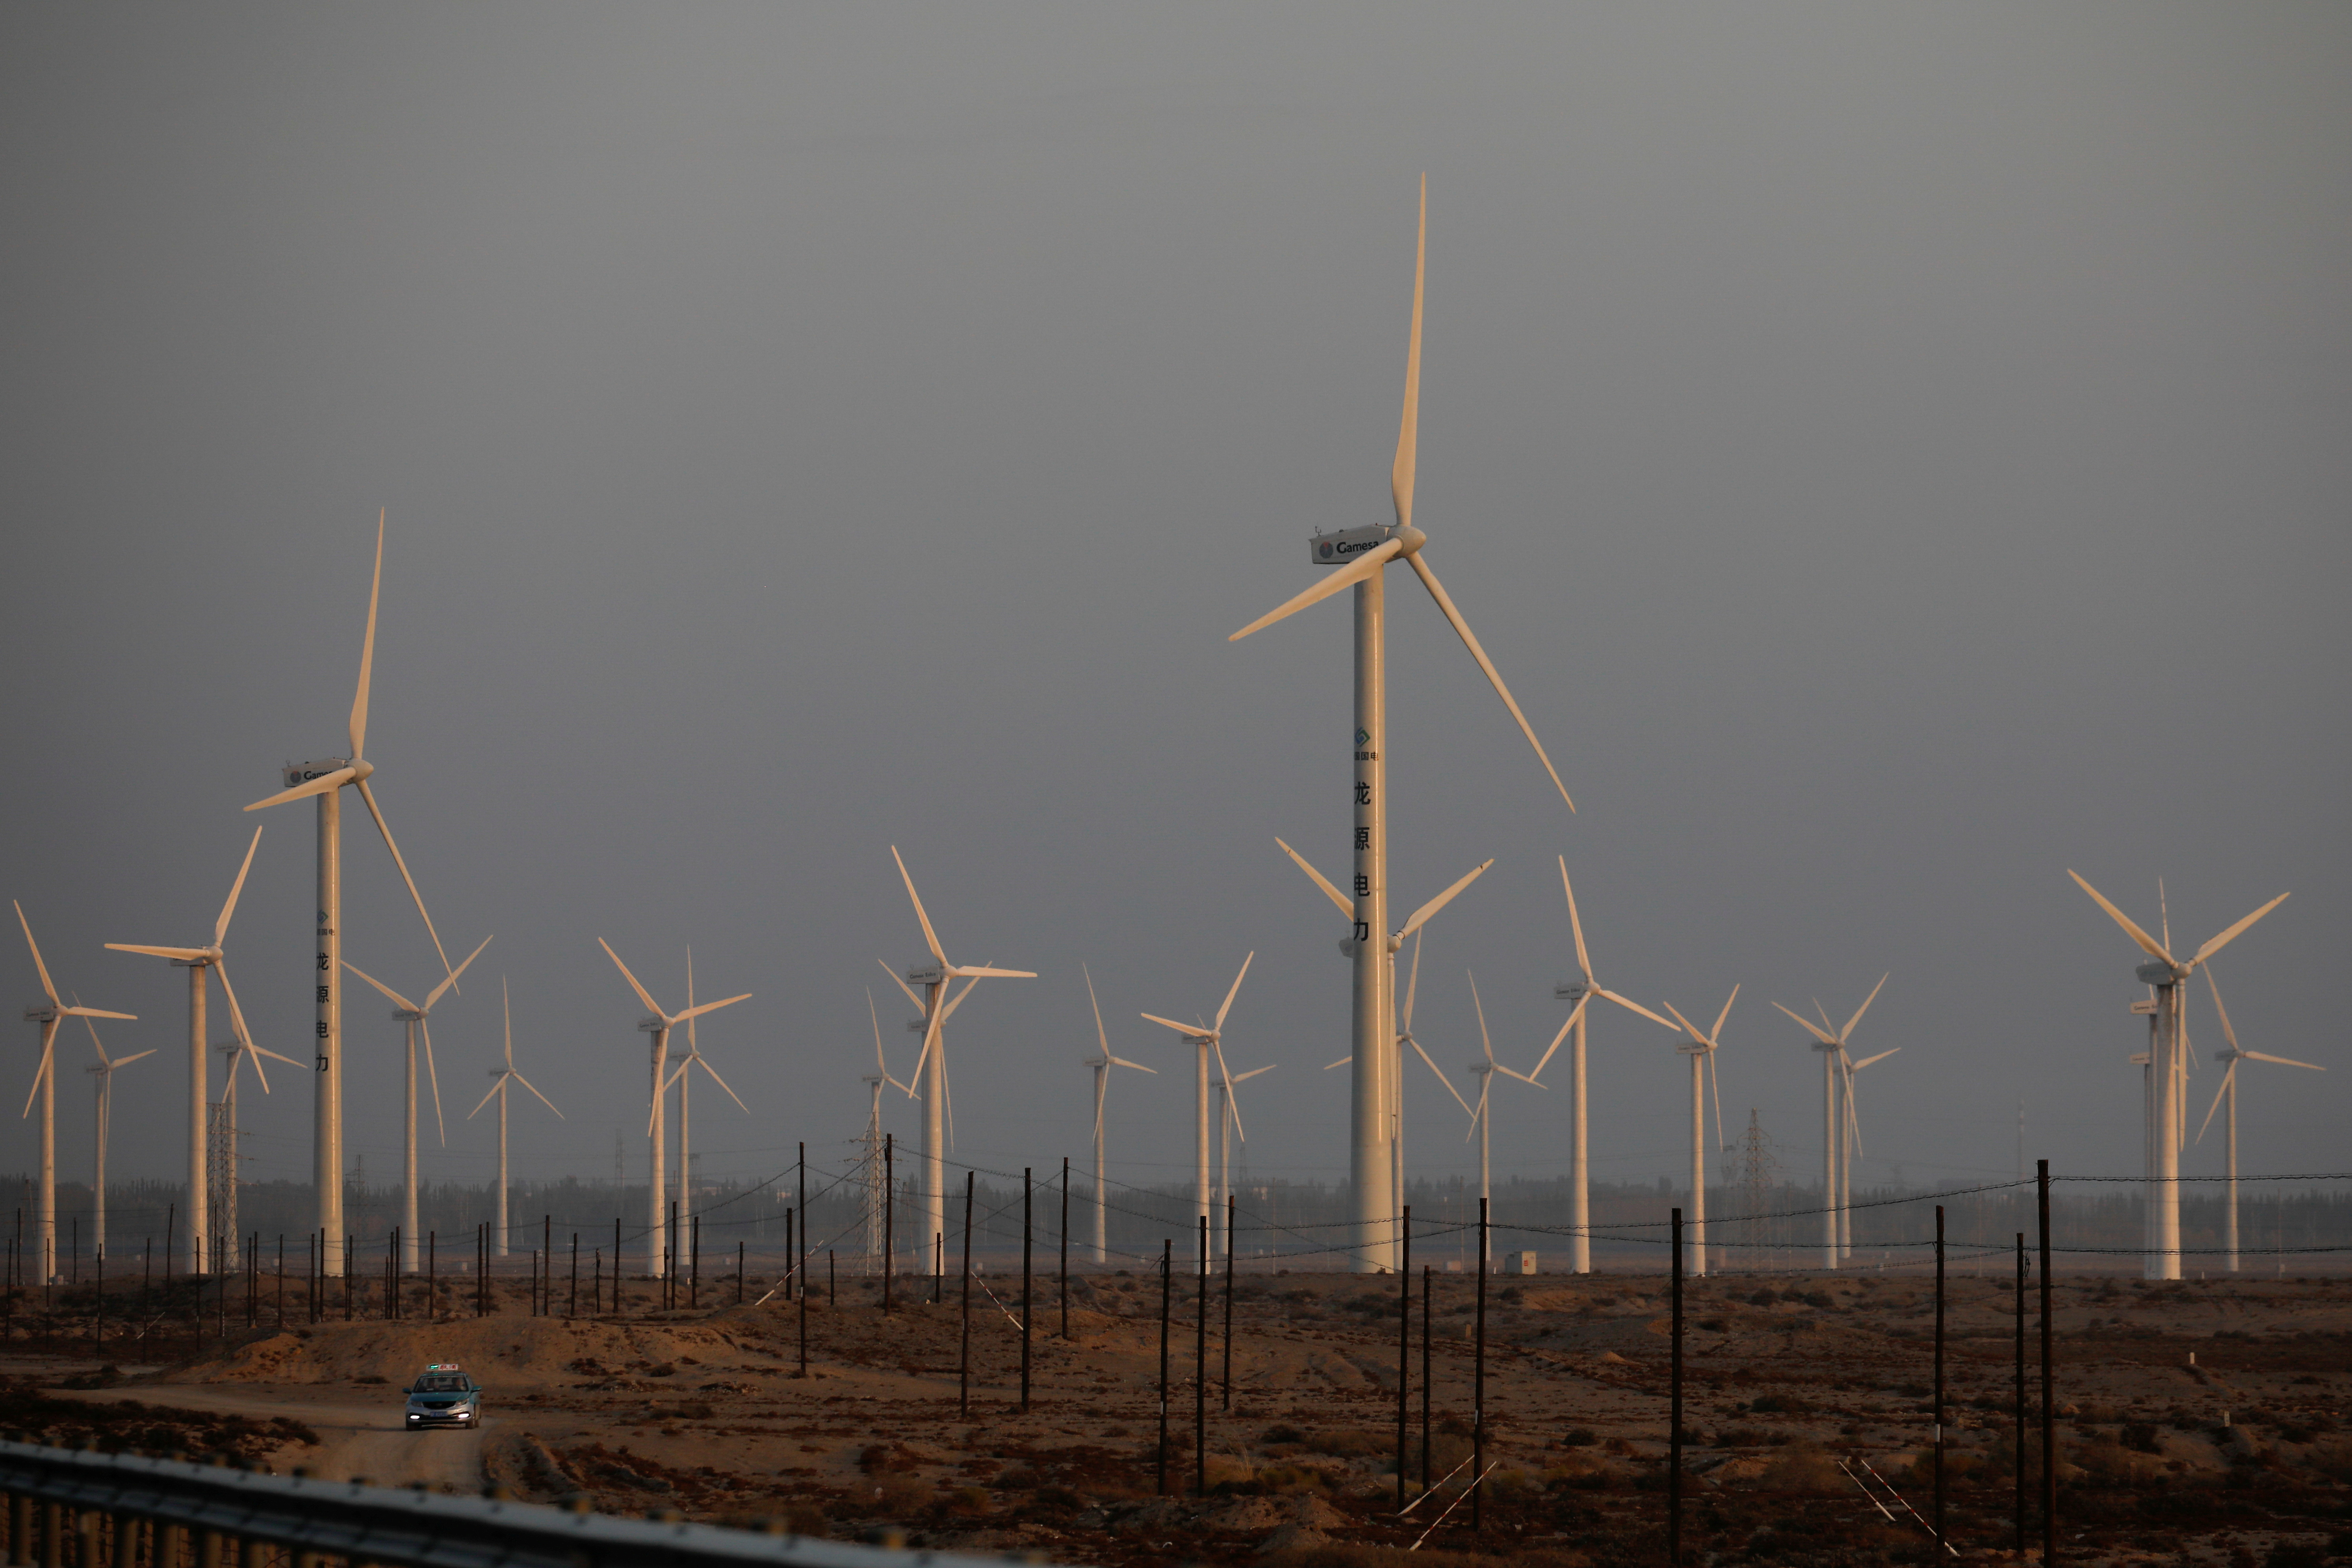 A car drives near wind turbines on a power station near Yumen, Gansu province, China September 29, 2020. Picture taken September 29, 2020. REUTERS/Carlos Garcia Rawlins